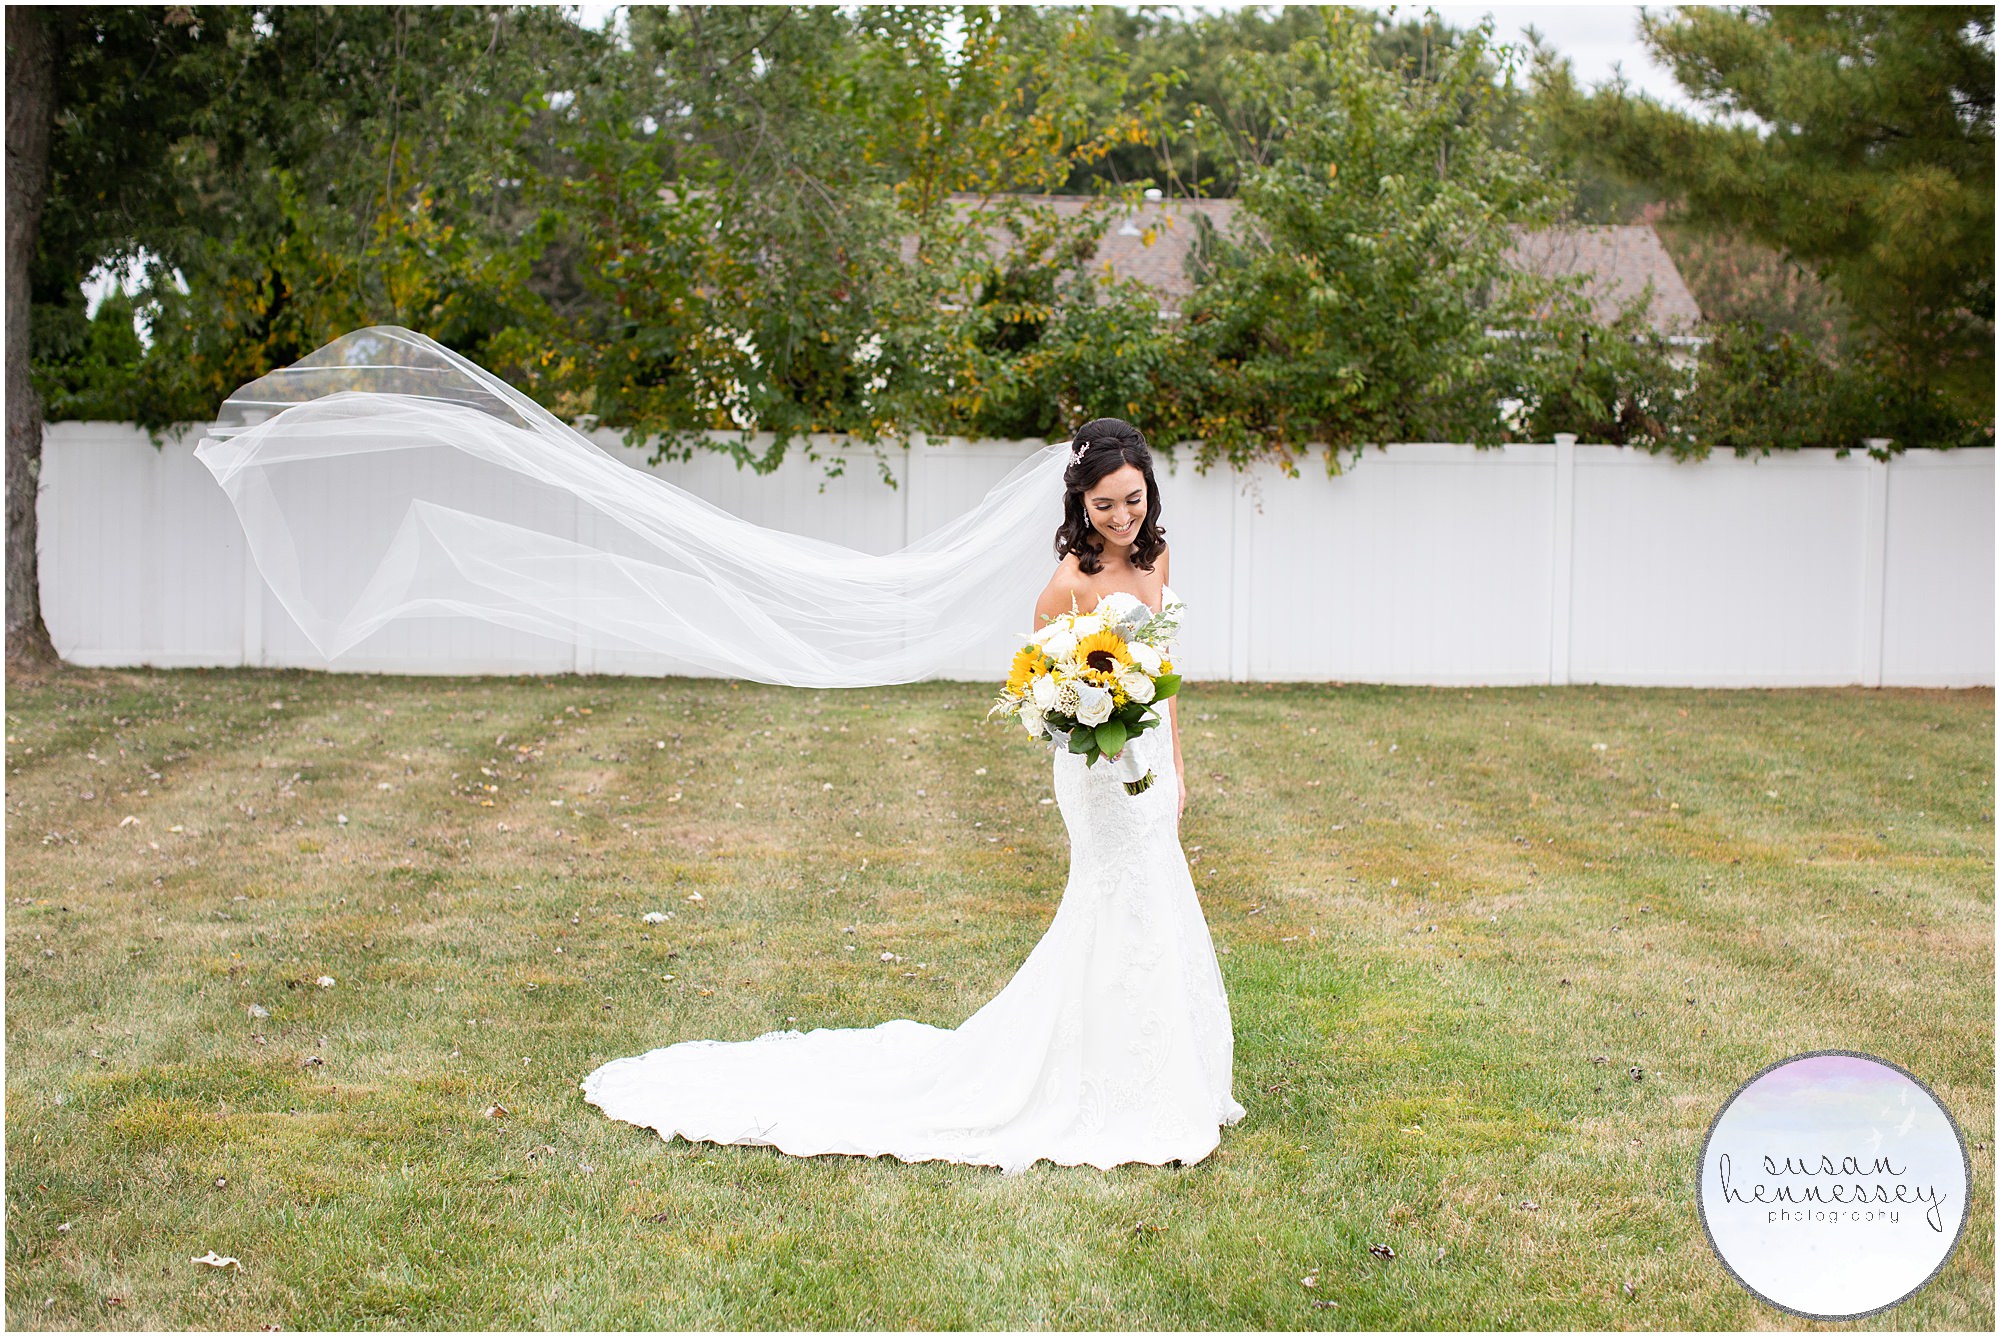 Bride's veil blows in wind